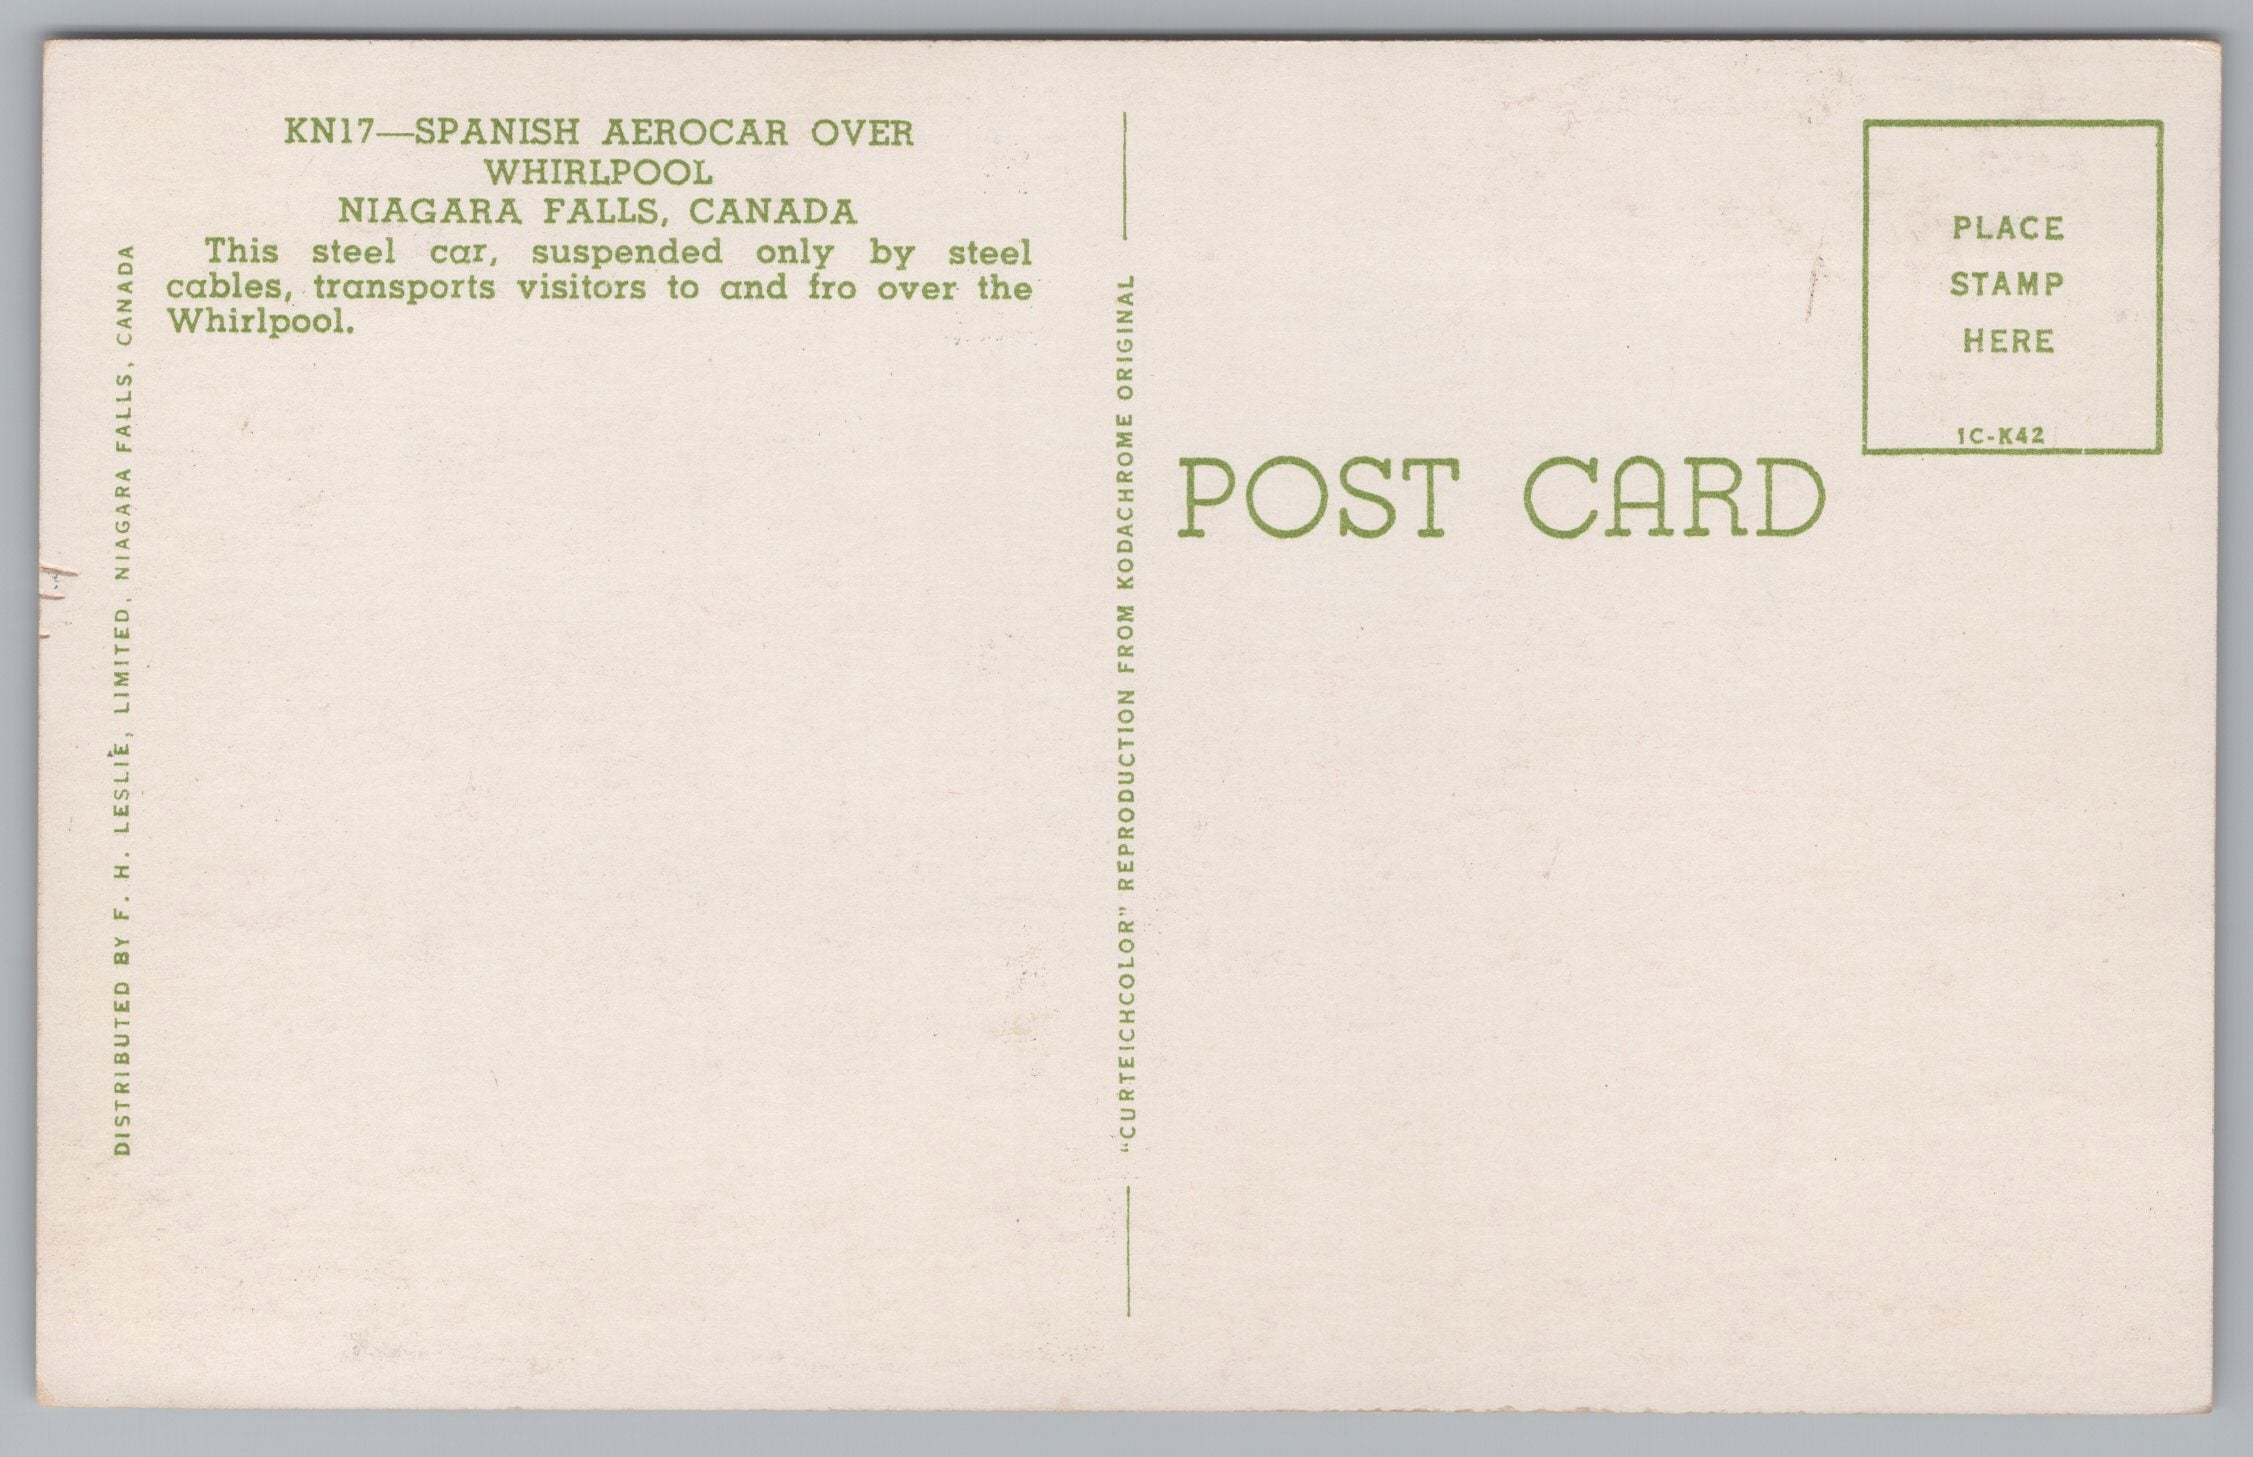 Spanish Aerocar Over Whirlpool, Niagara Falls, Canada, Vintage Post Card.